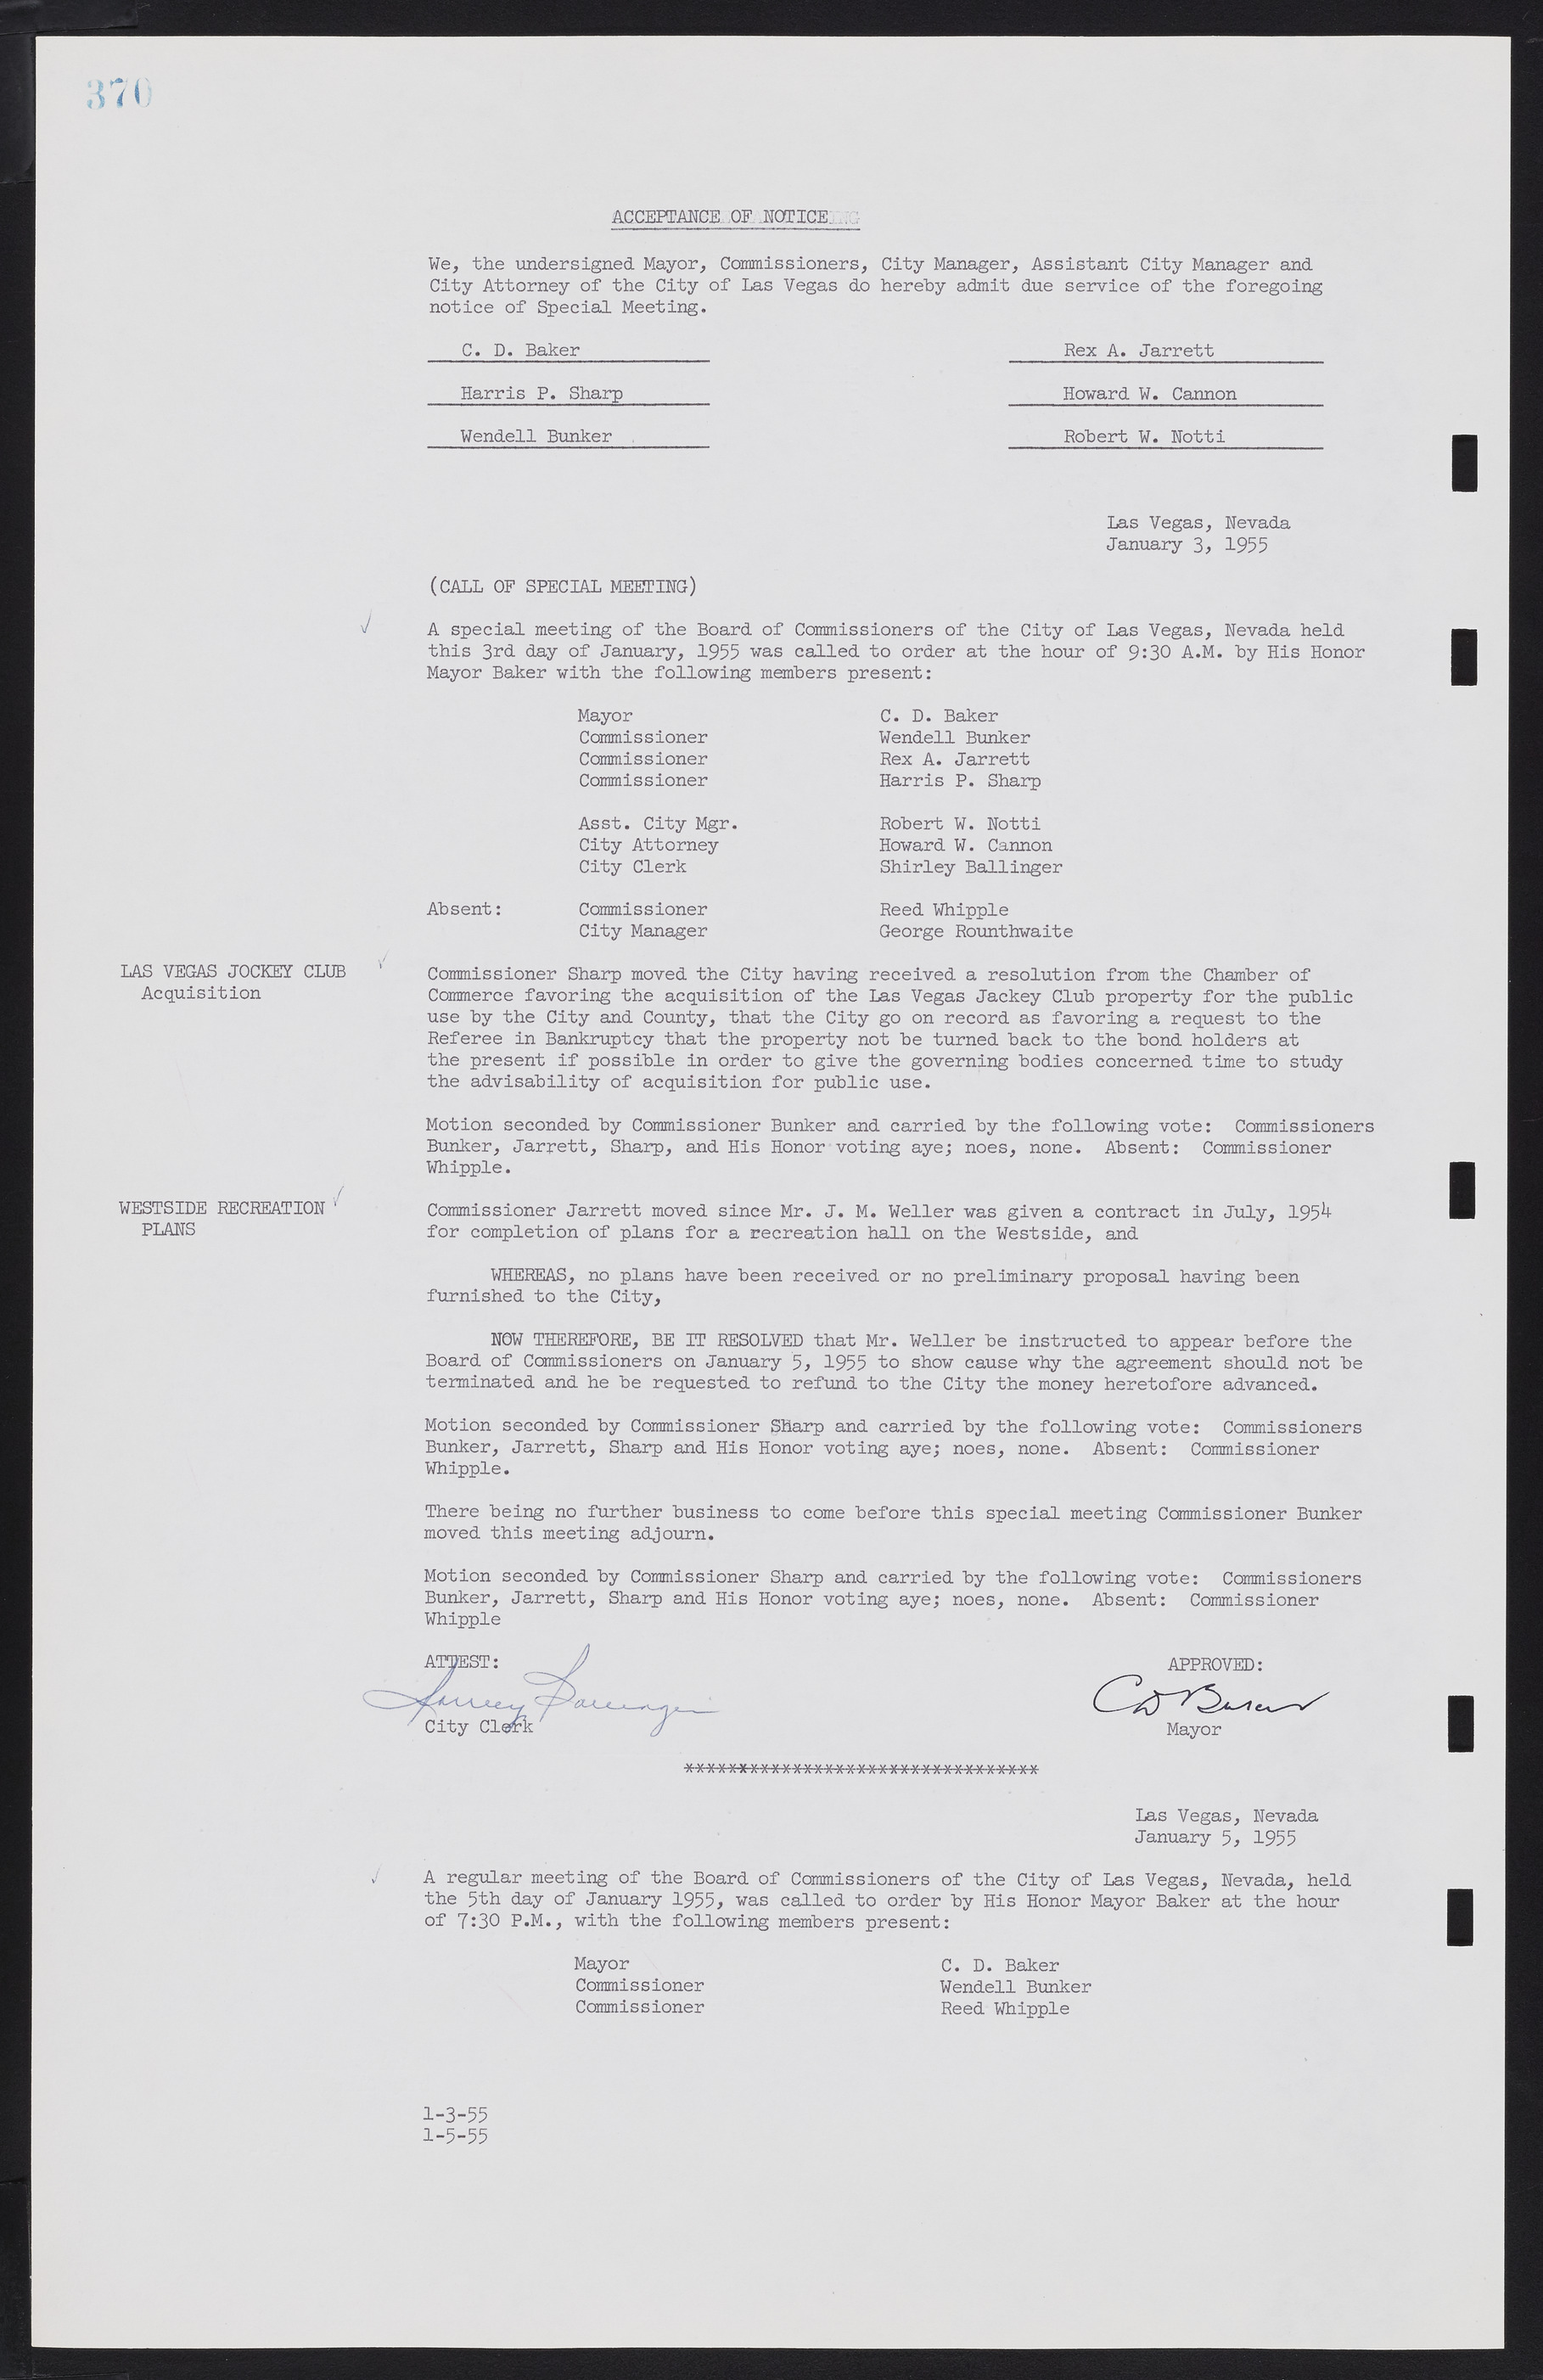 Las Vegas City Commission Minutes, February 17, 1954 to September 21, 1955, lvc000009-376